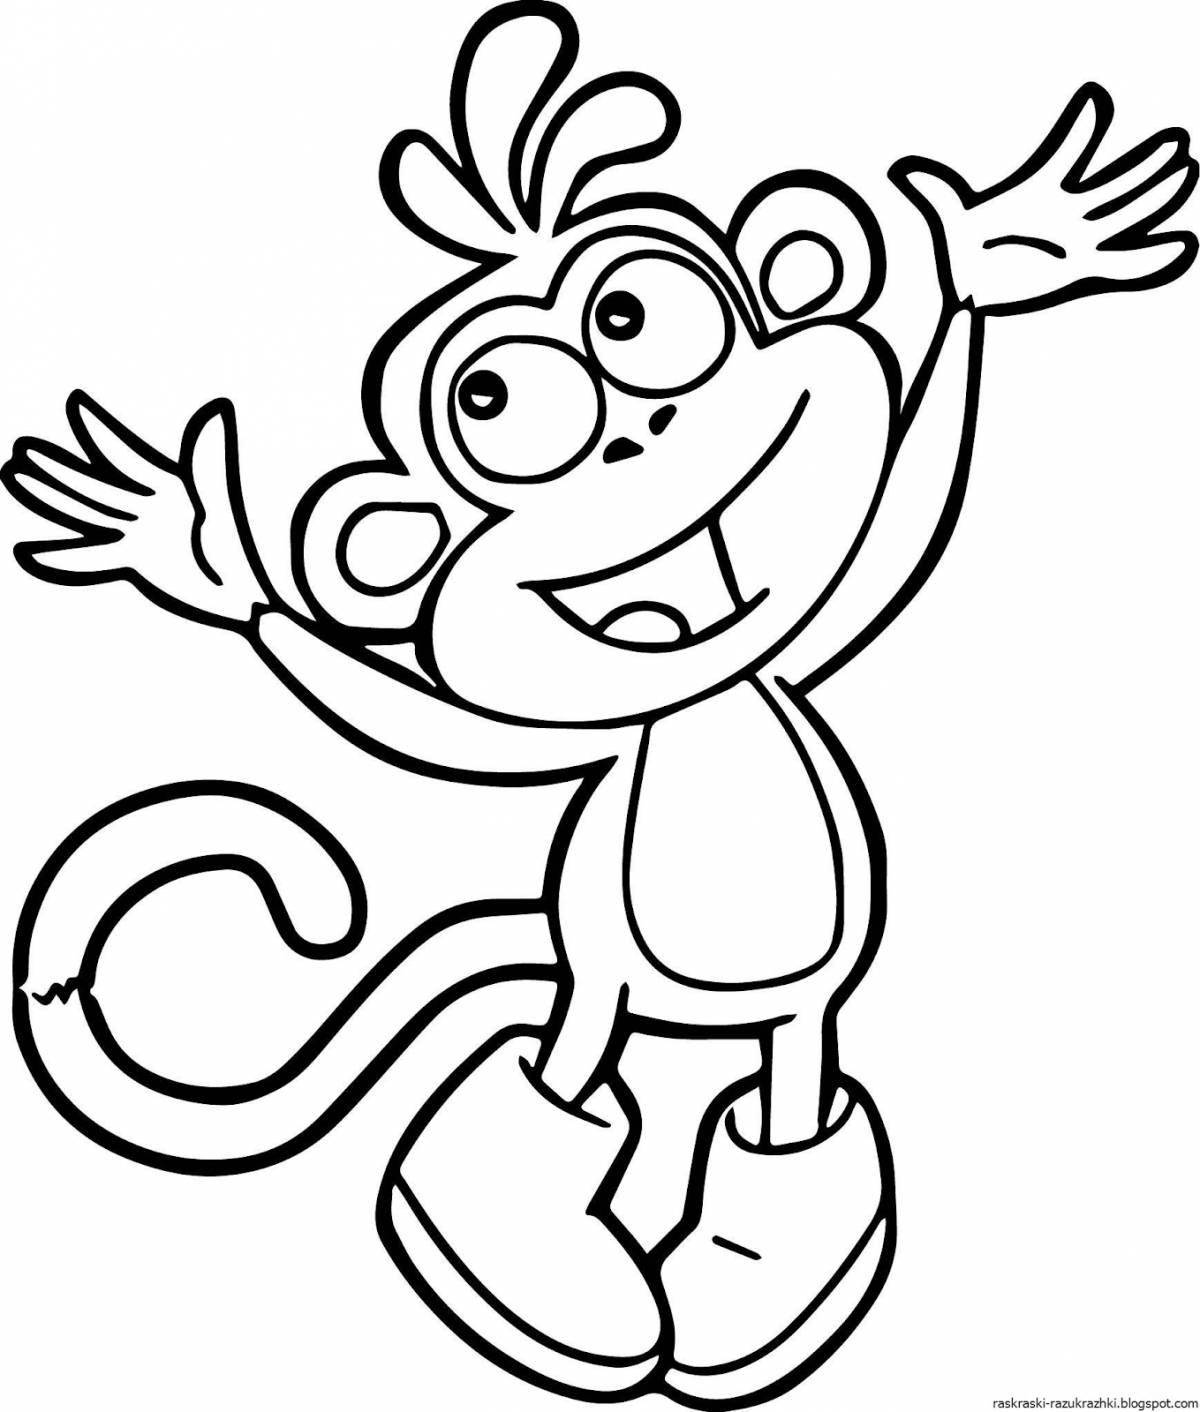 Fun coloring monkey for kids